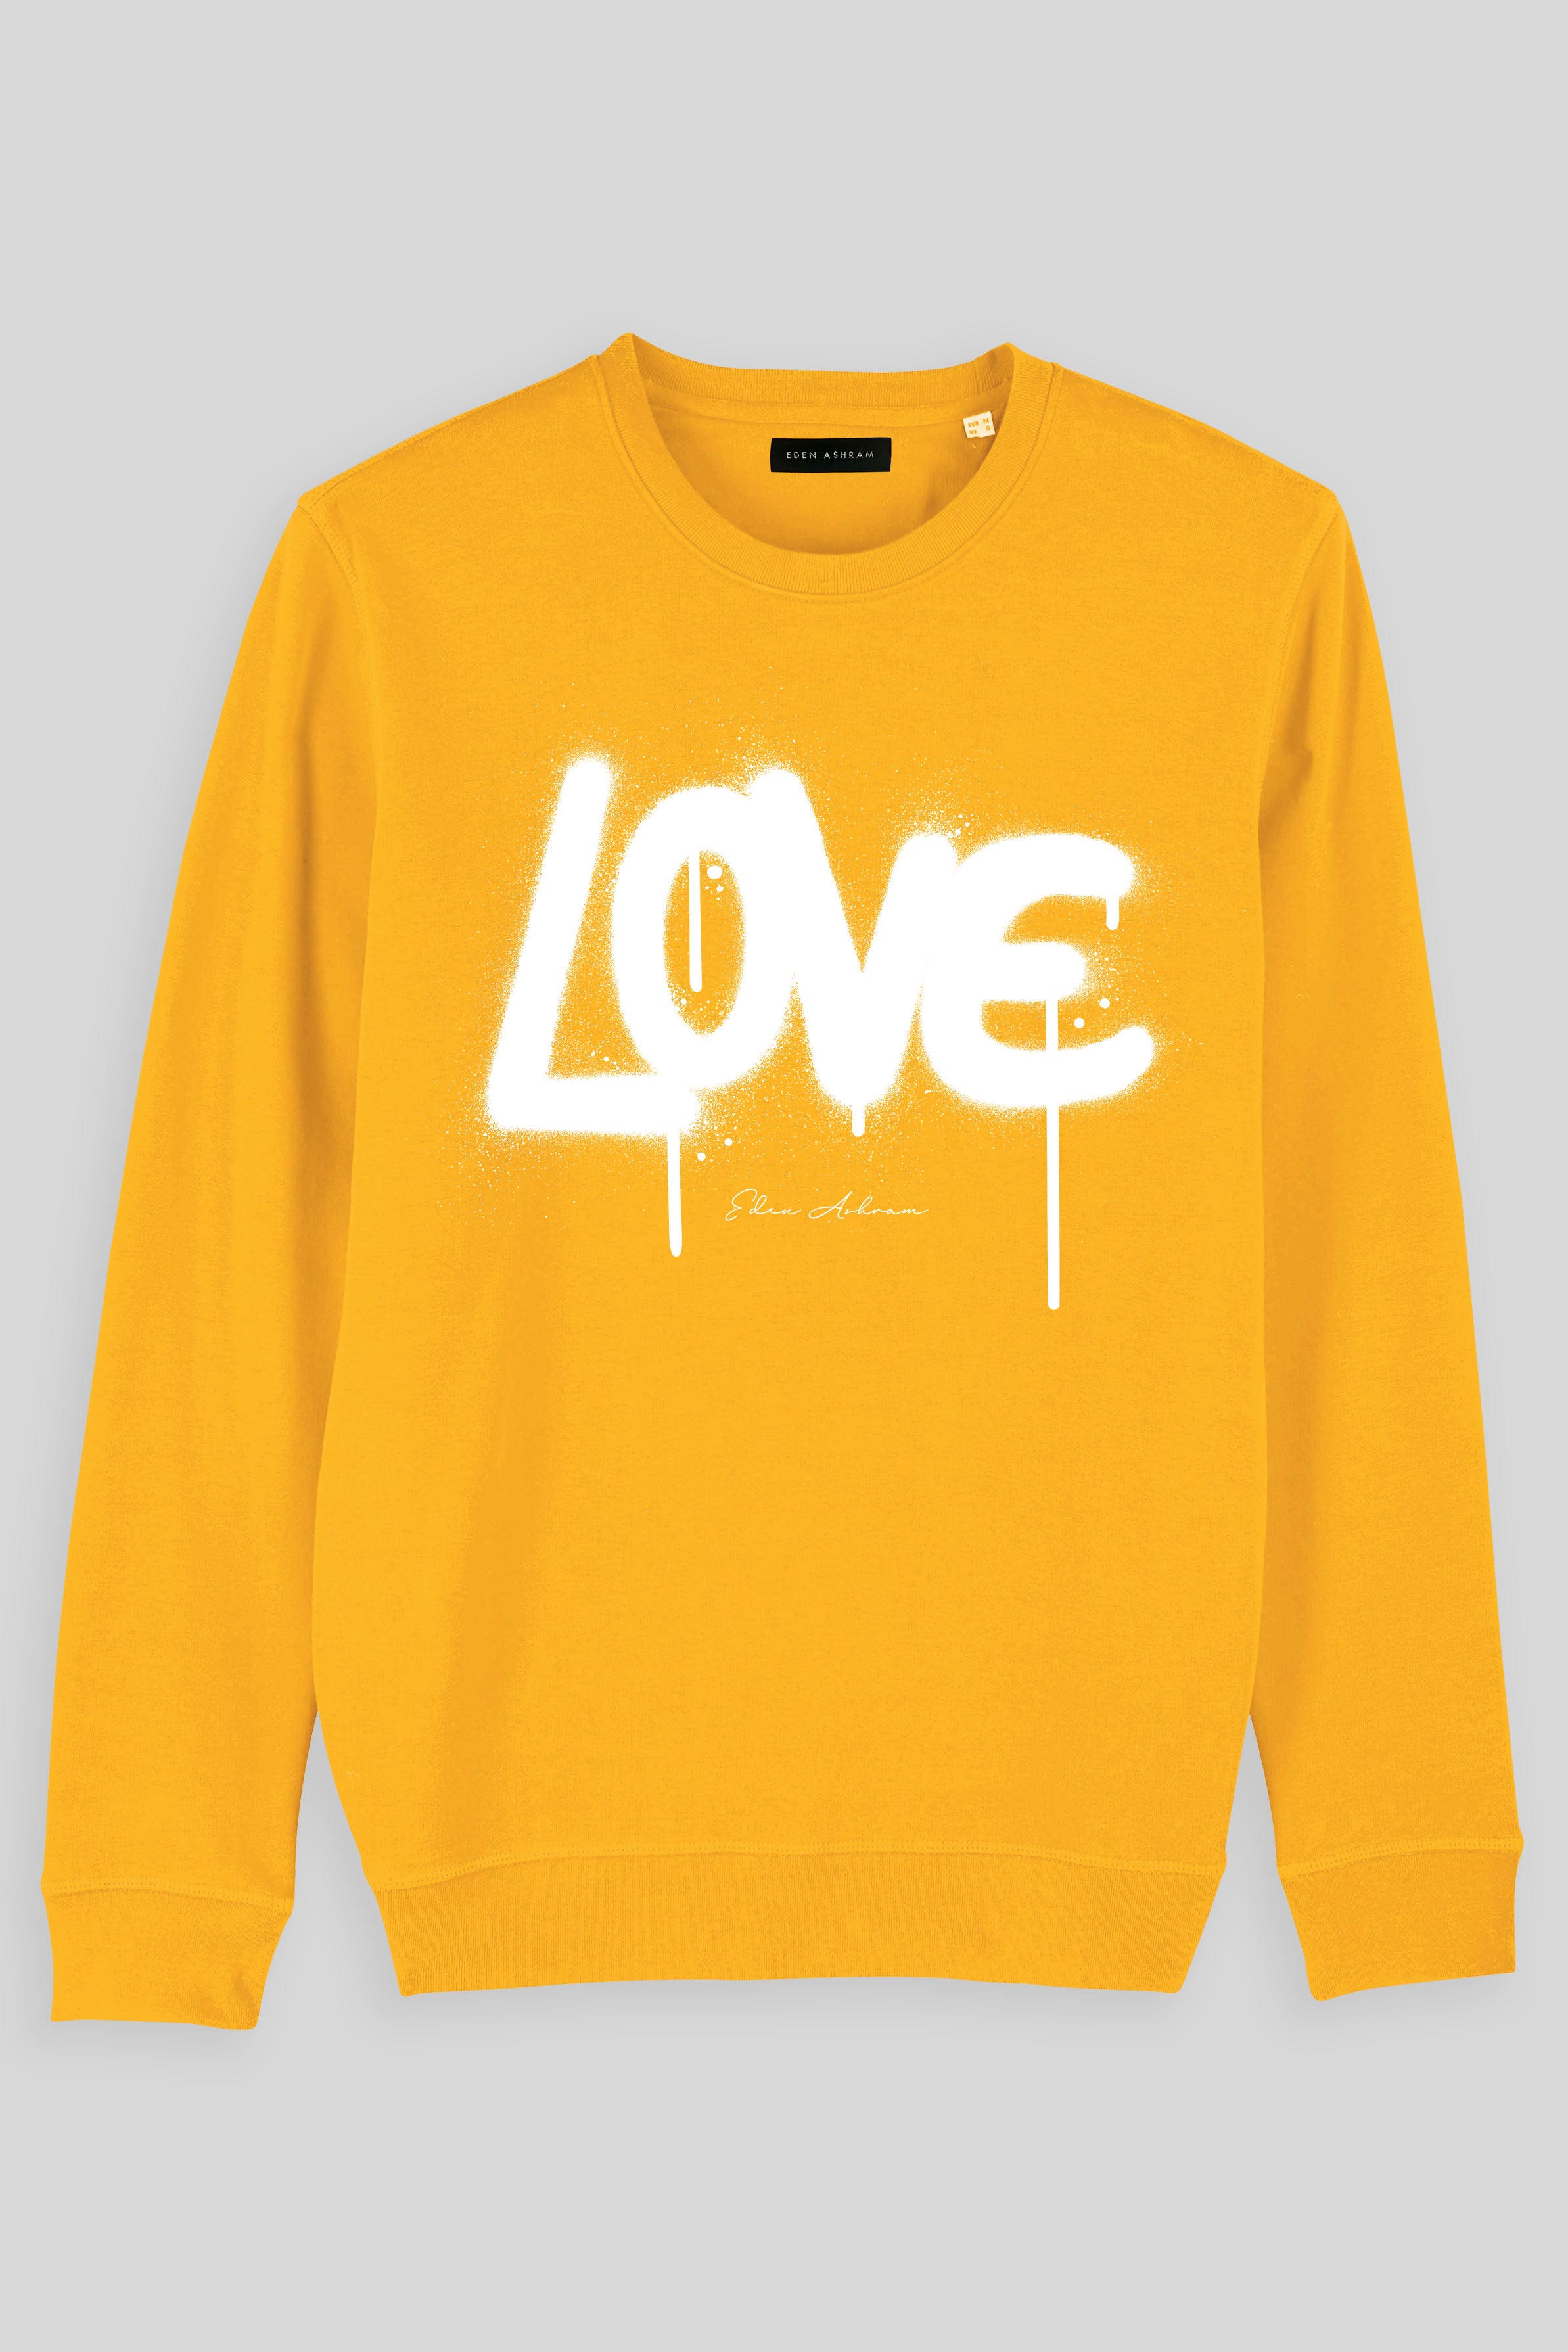 Eden Ashram Graffiti Love Premium Crew Neck Sweatshirt Spectra Yellow